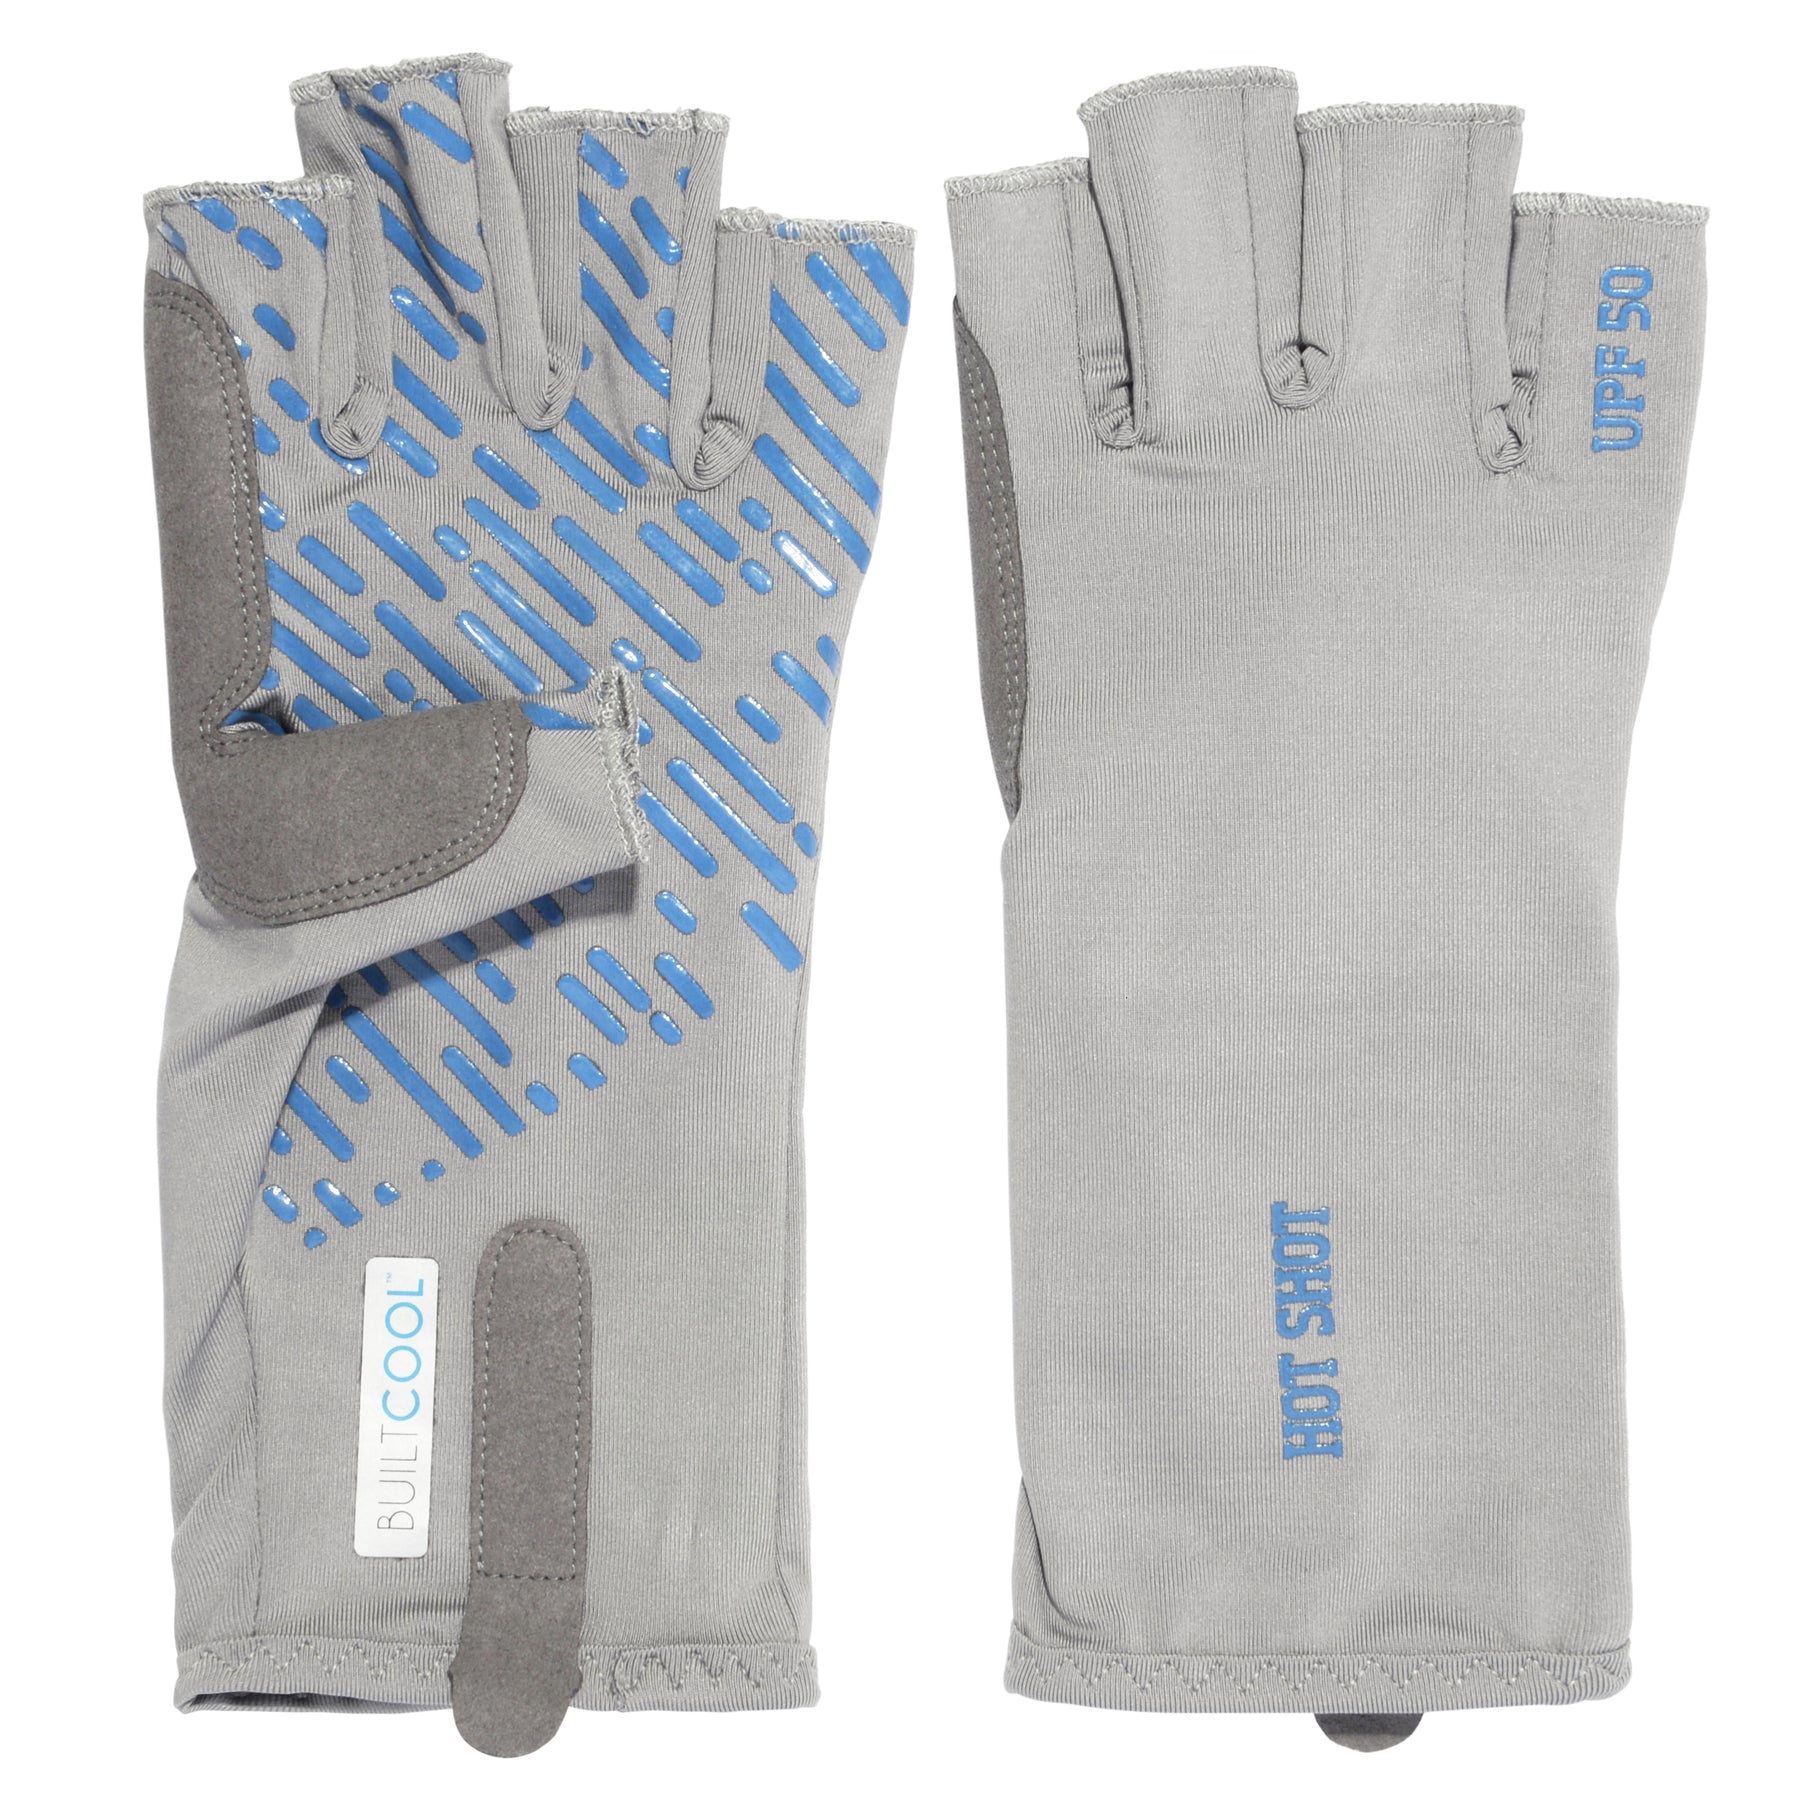 Unbranded Neoprene Waterproof Fishing Gloves for sale